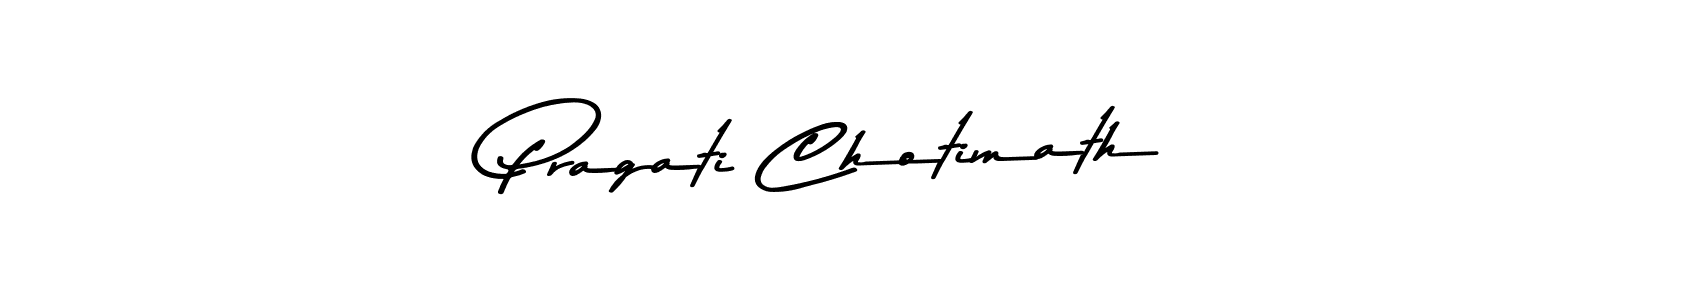 Make a beautiful signature design for name Pragati Chotimath. Use this online signature maker to create a handwritten signature for free. Pragati Chotimath signature style 9 images and pictures png